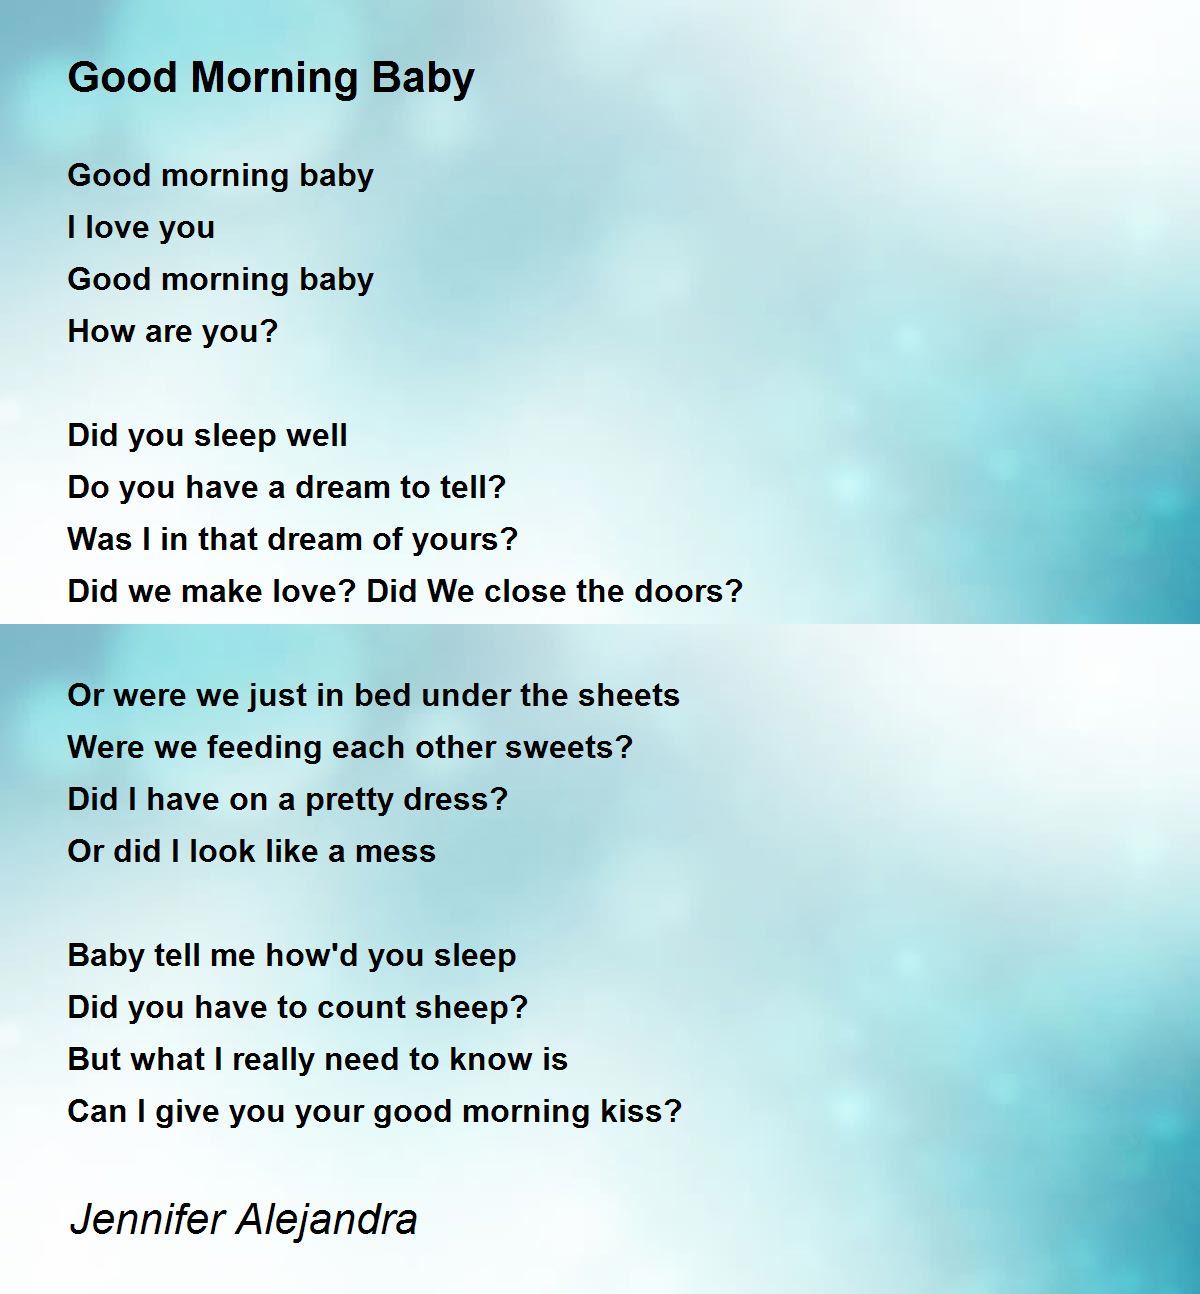 Good Morning Baby - Good Morning Baby Poem by Jennifer Alejandra